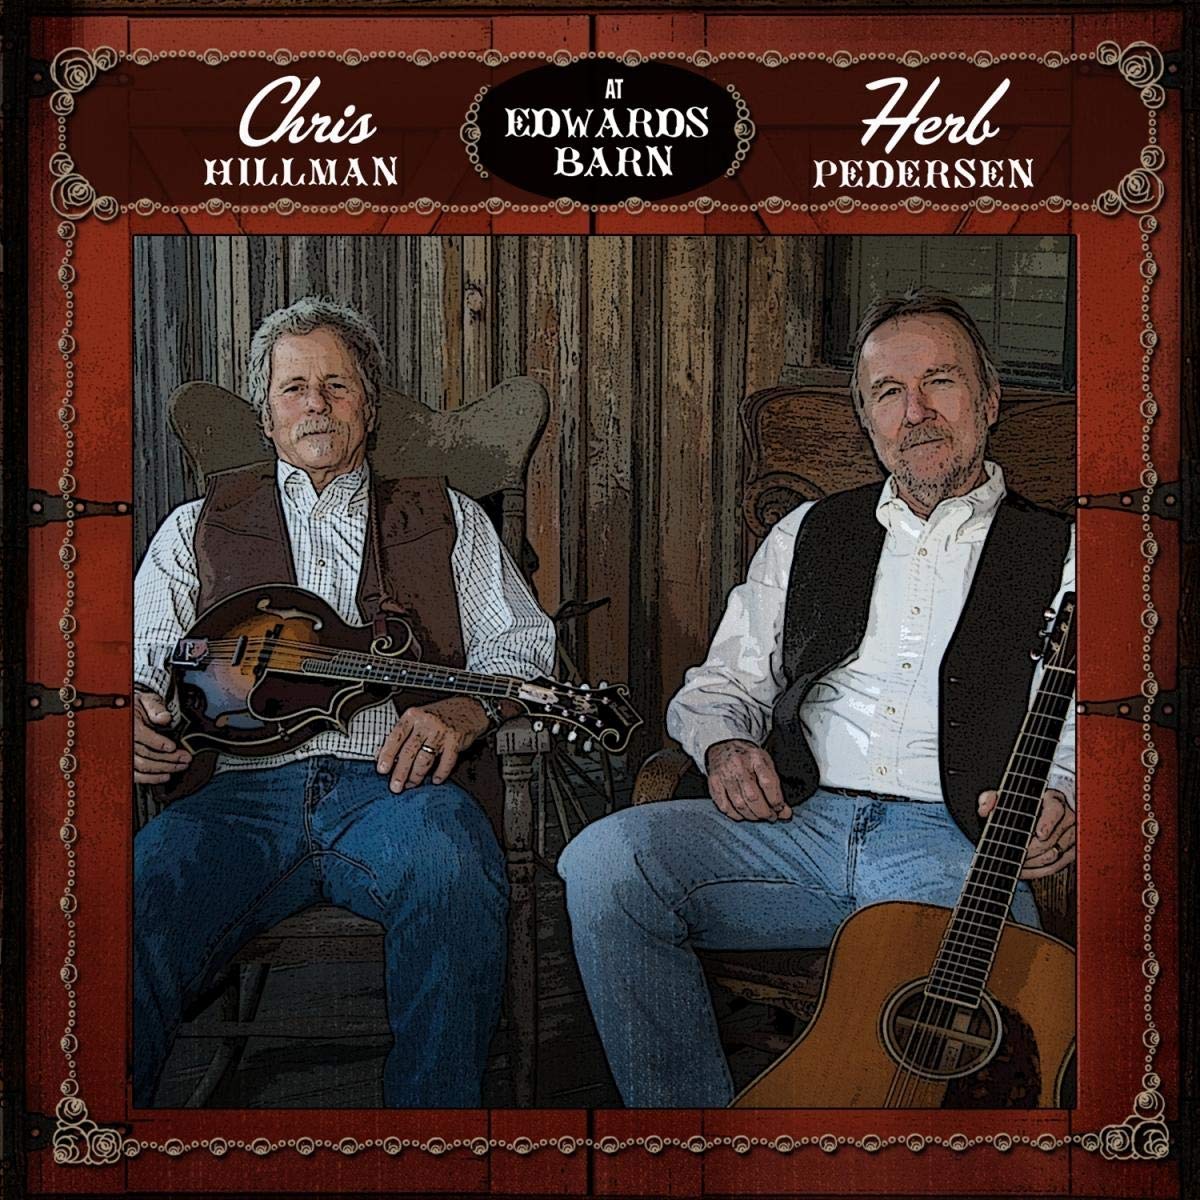 "At Edwards Barn" CD (Chris Hillman & Herb Pedersen)